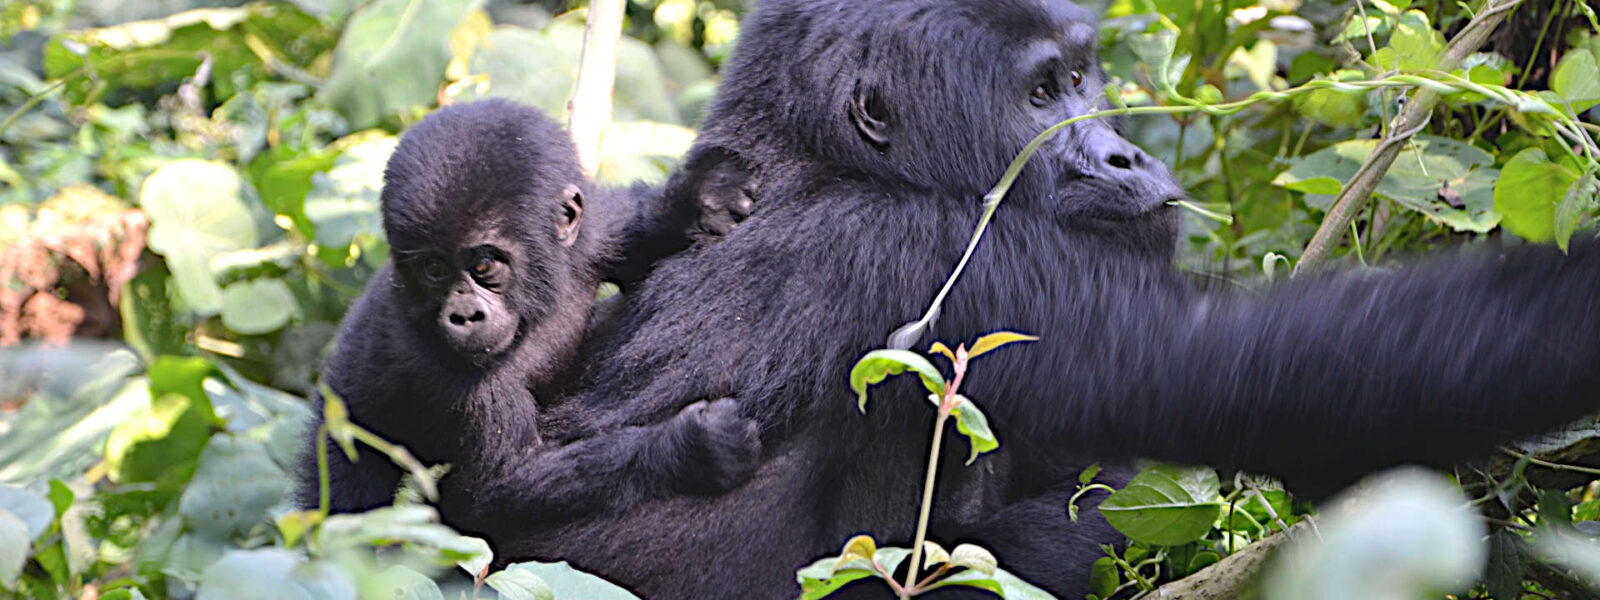 3 Days cheapest Gorilla Safari in Uganda